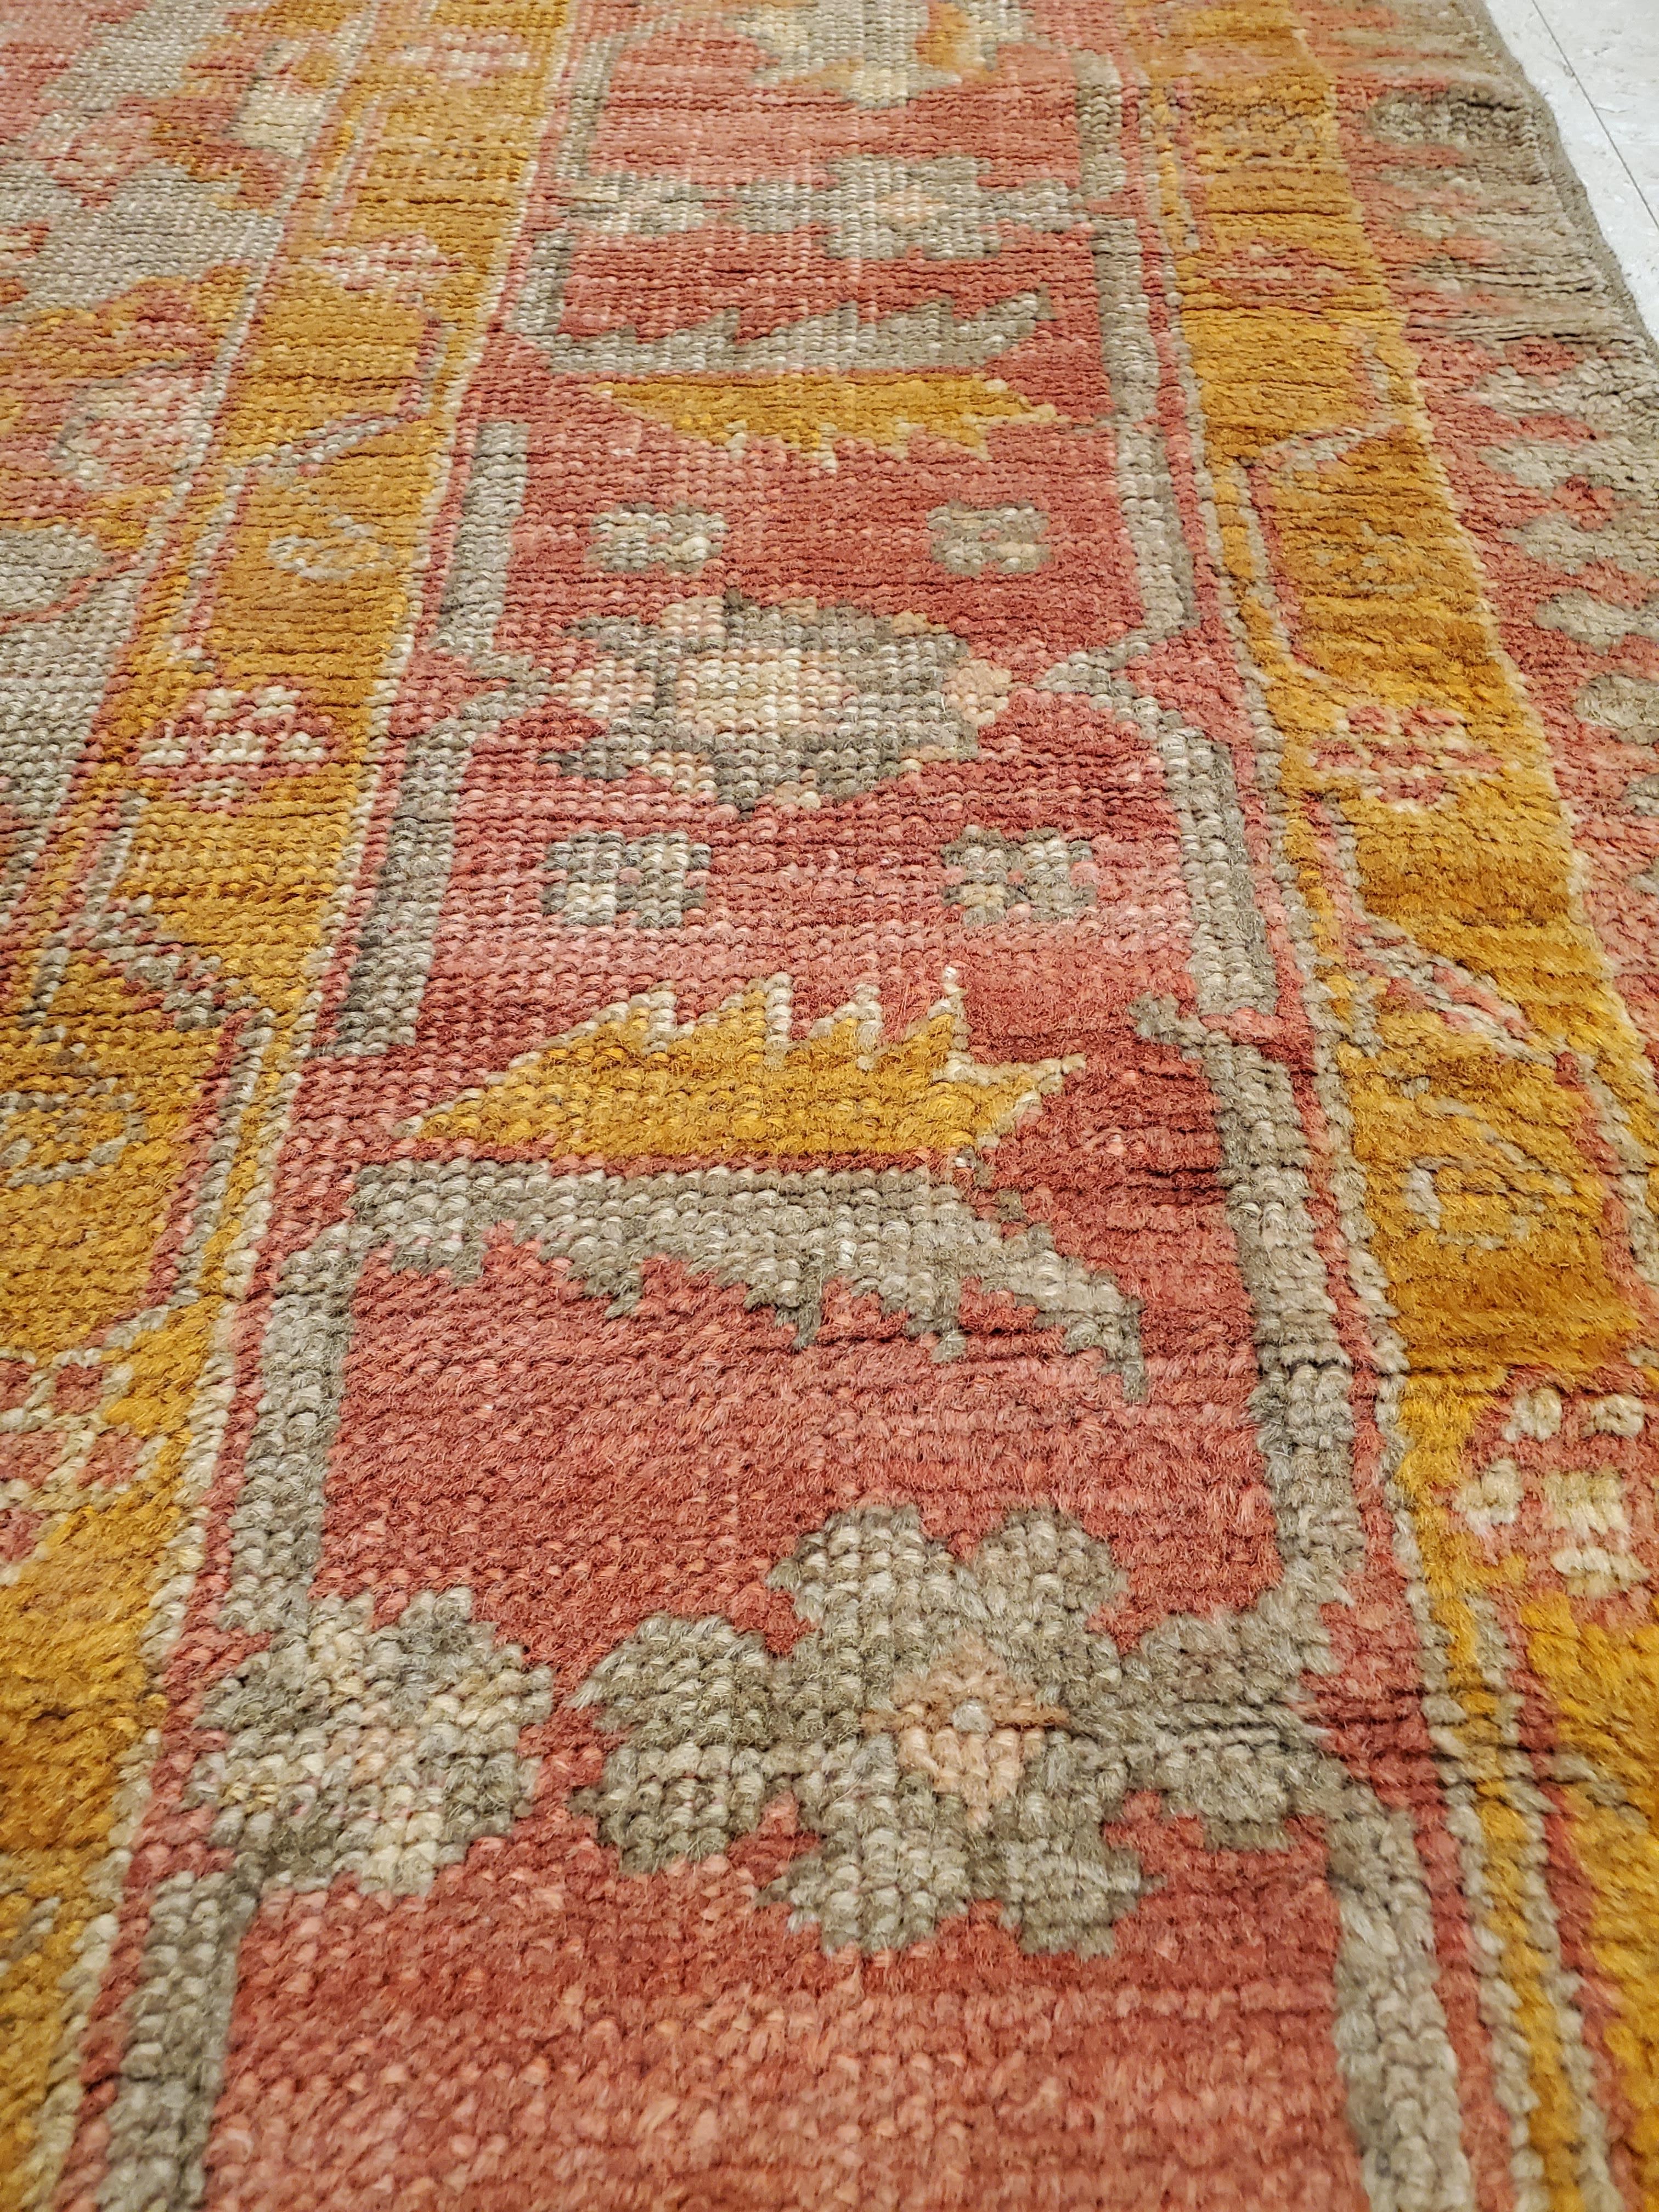 Antique Oushak Carpet, Handmade Turkish Oriental Rug, Saffron, Coral, Light Blue For Sale 1